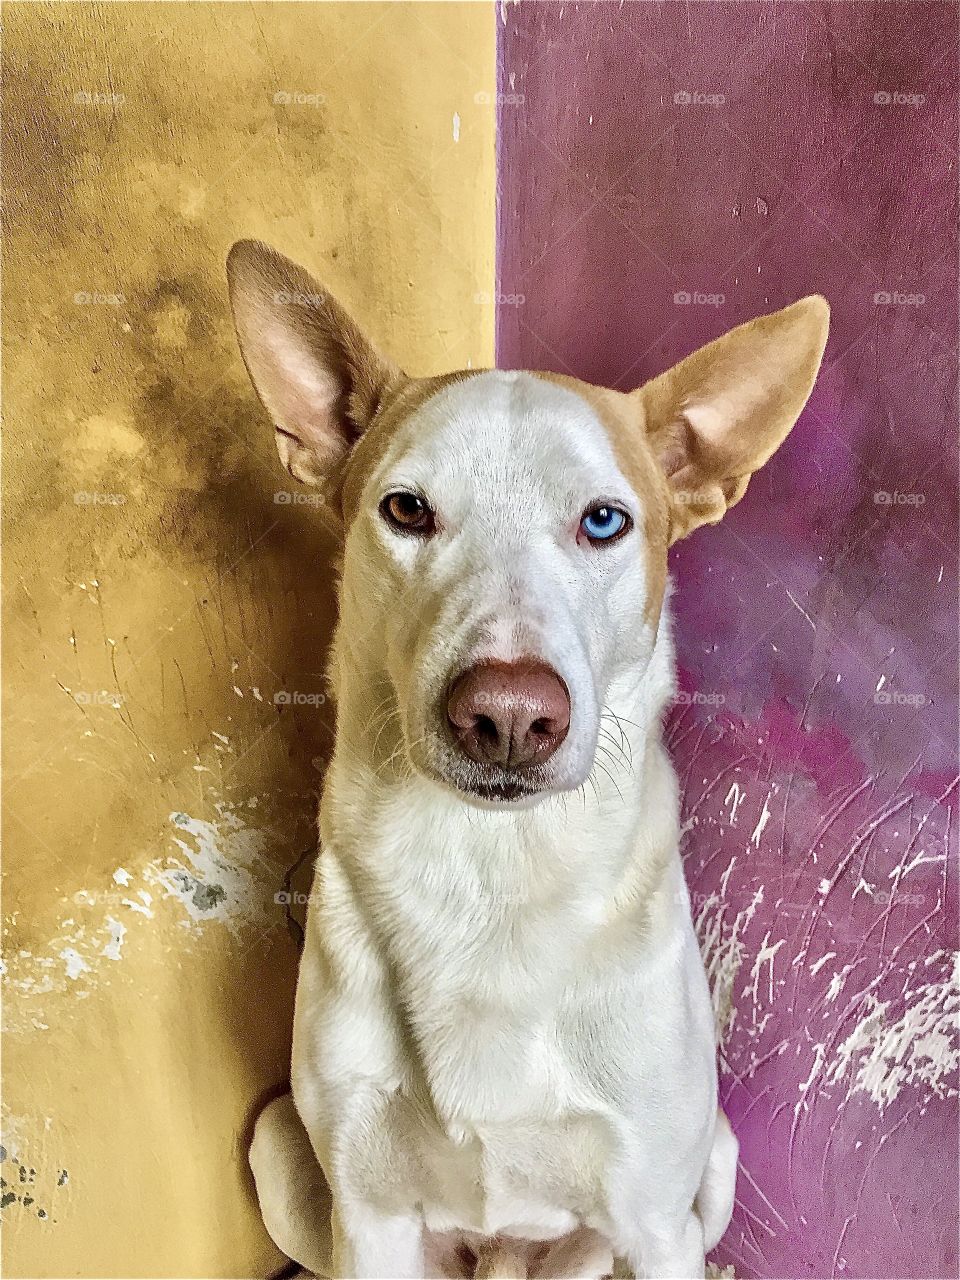 Charming dog with blue eye. 